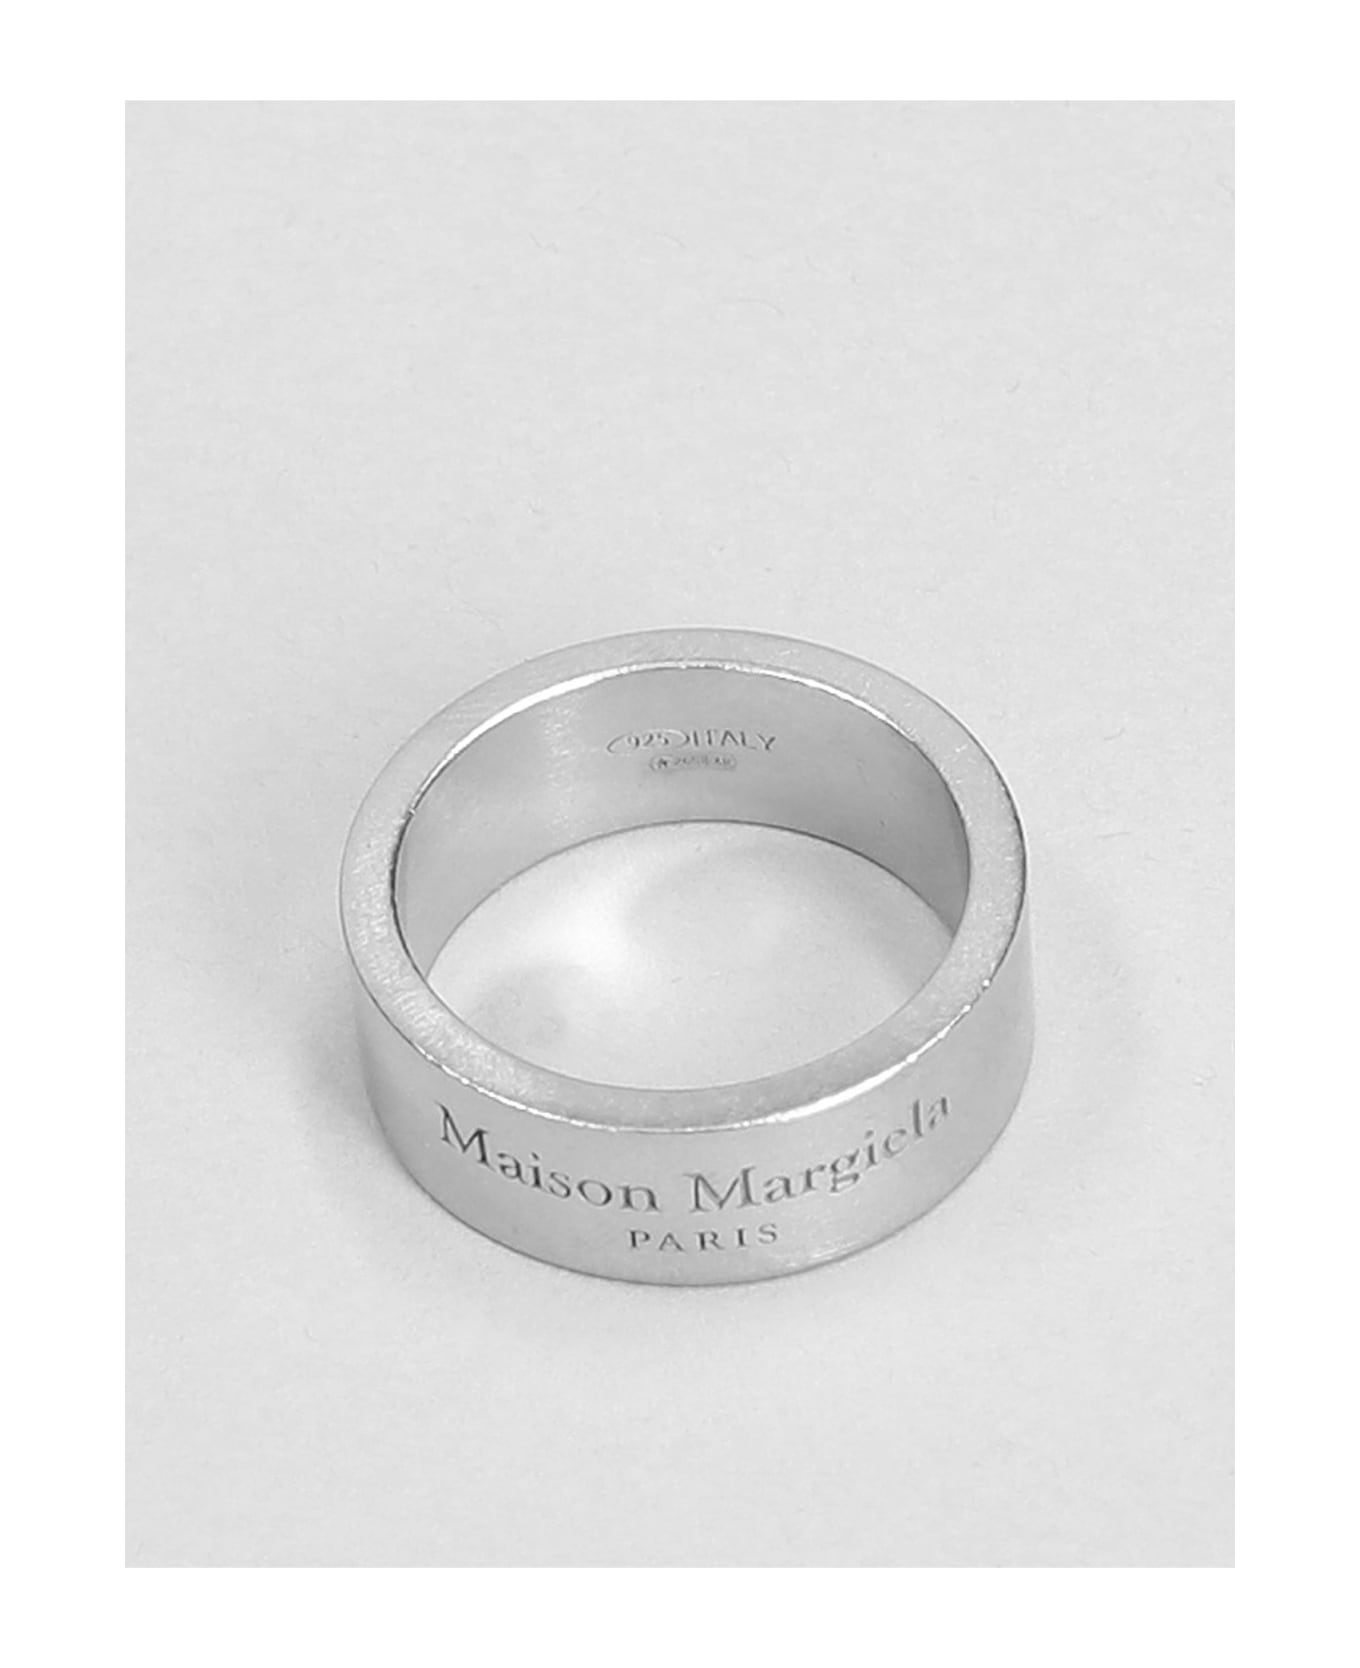 Maison Margiela Logo Ring - Silver